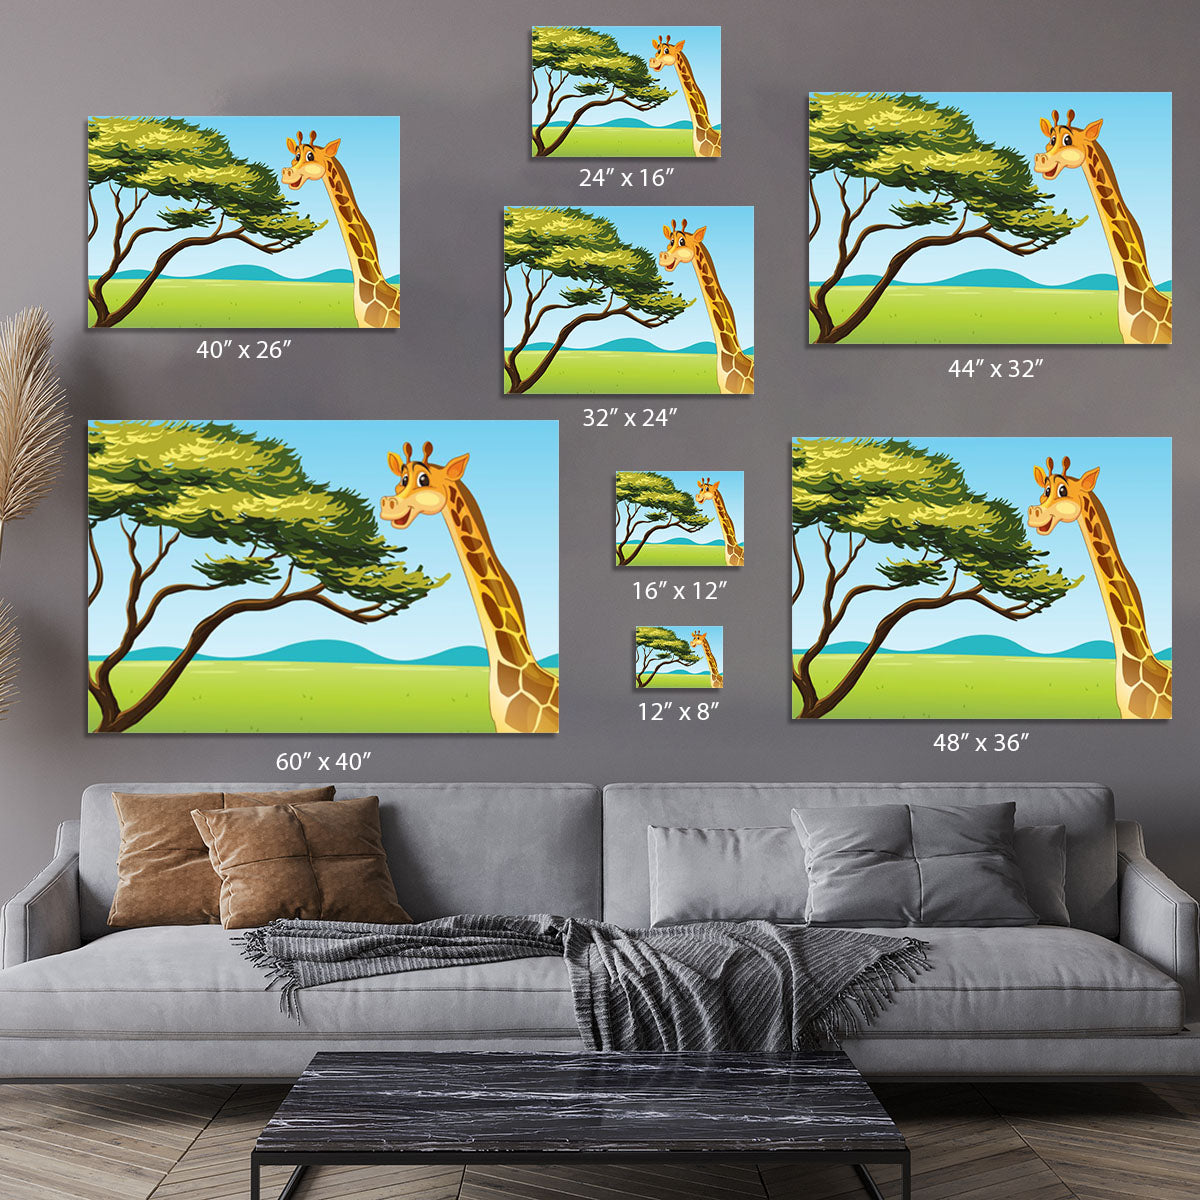 Illustration of a giraffe eating Canvas Print or Poster - Canvas Art Rocks - 7